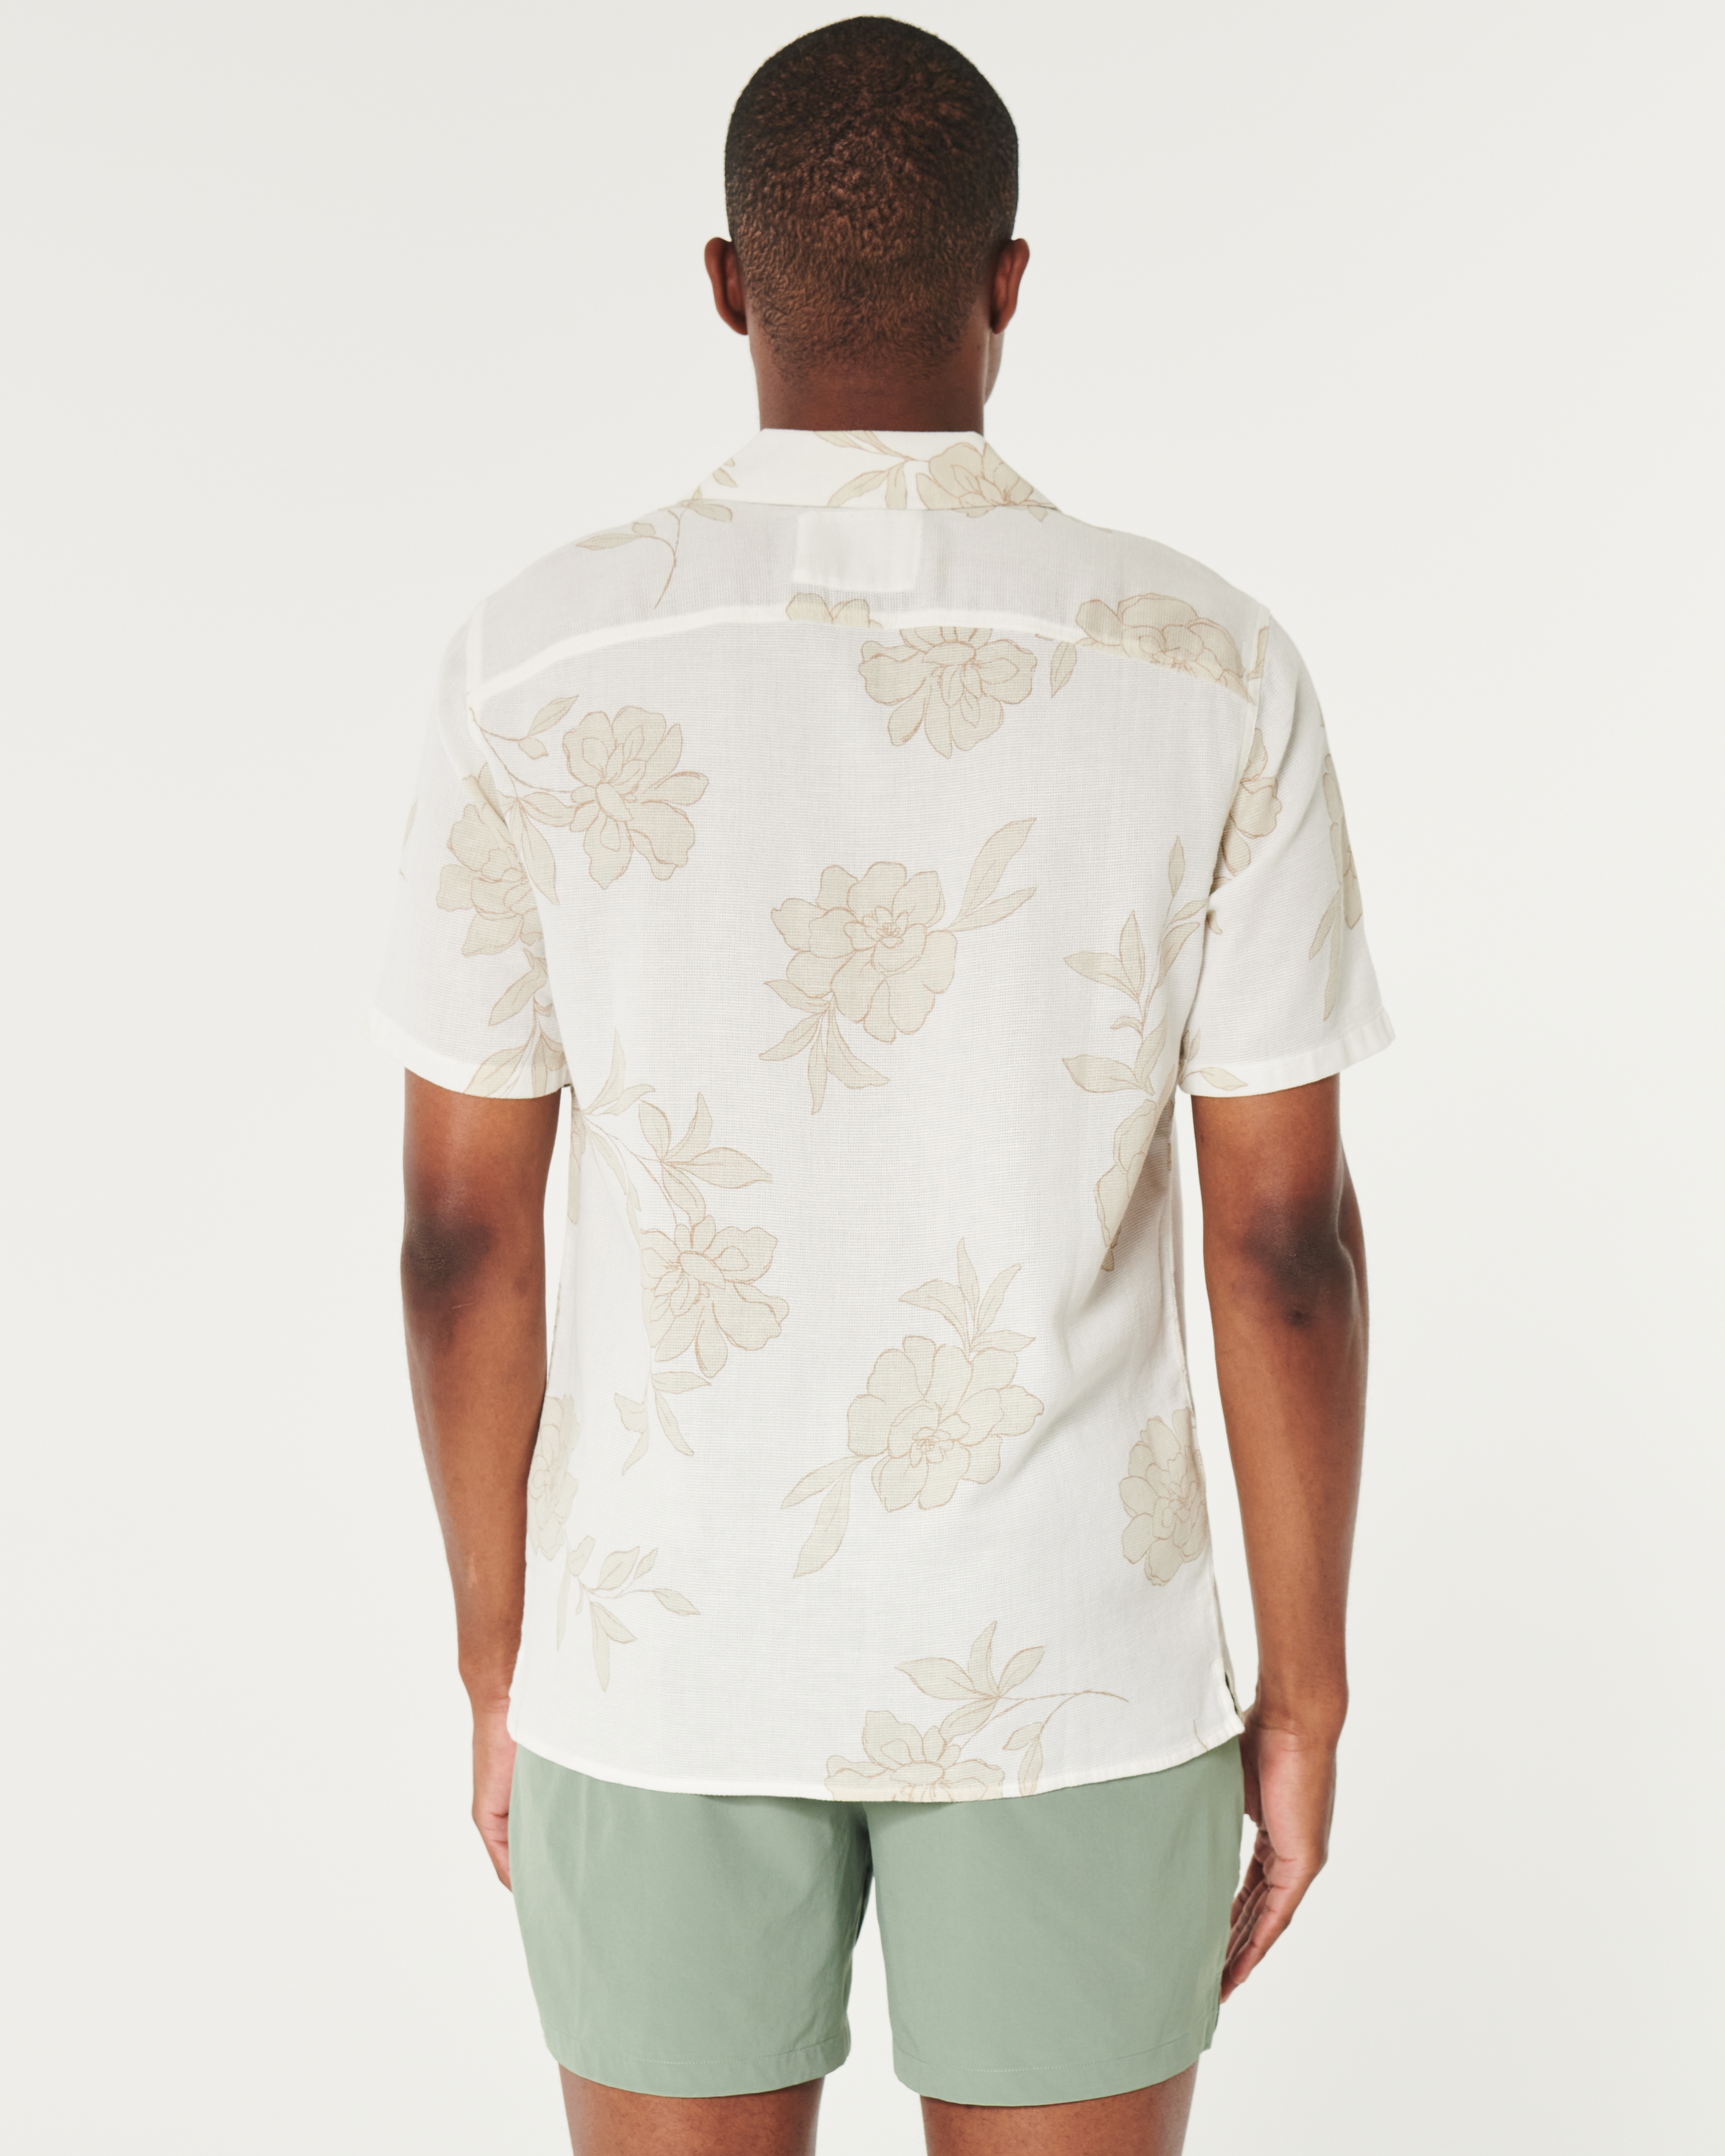 Hollister Men's Palm Trees Shirt Size Small White Cotton Blend Short Sleeve